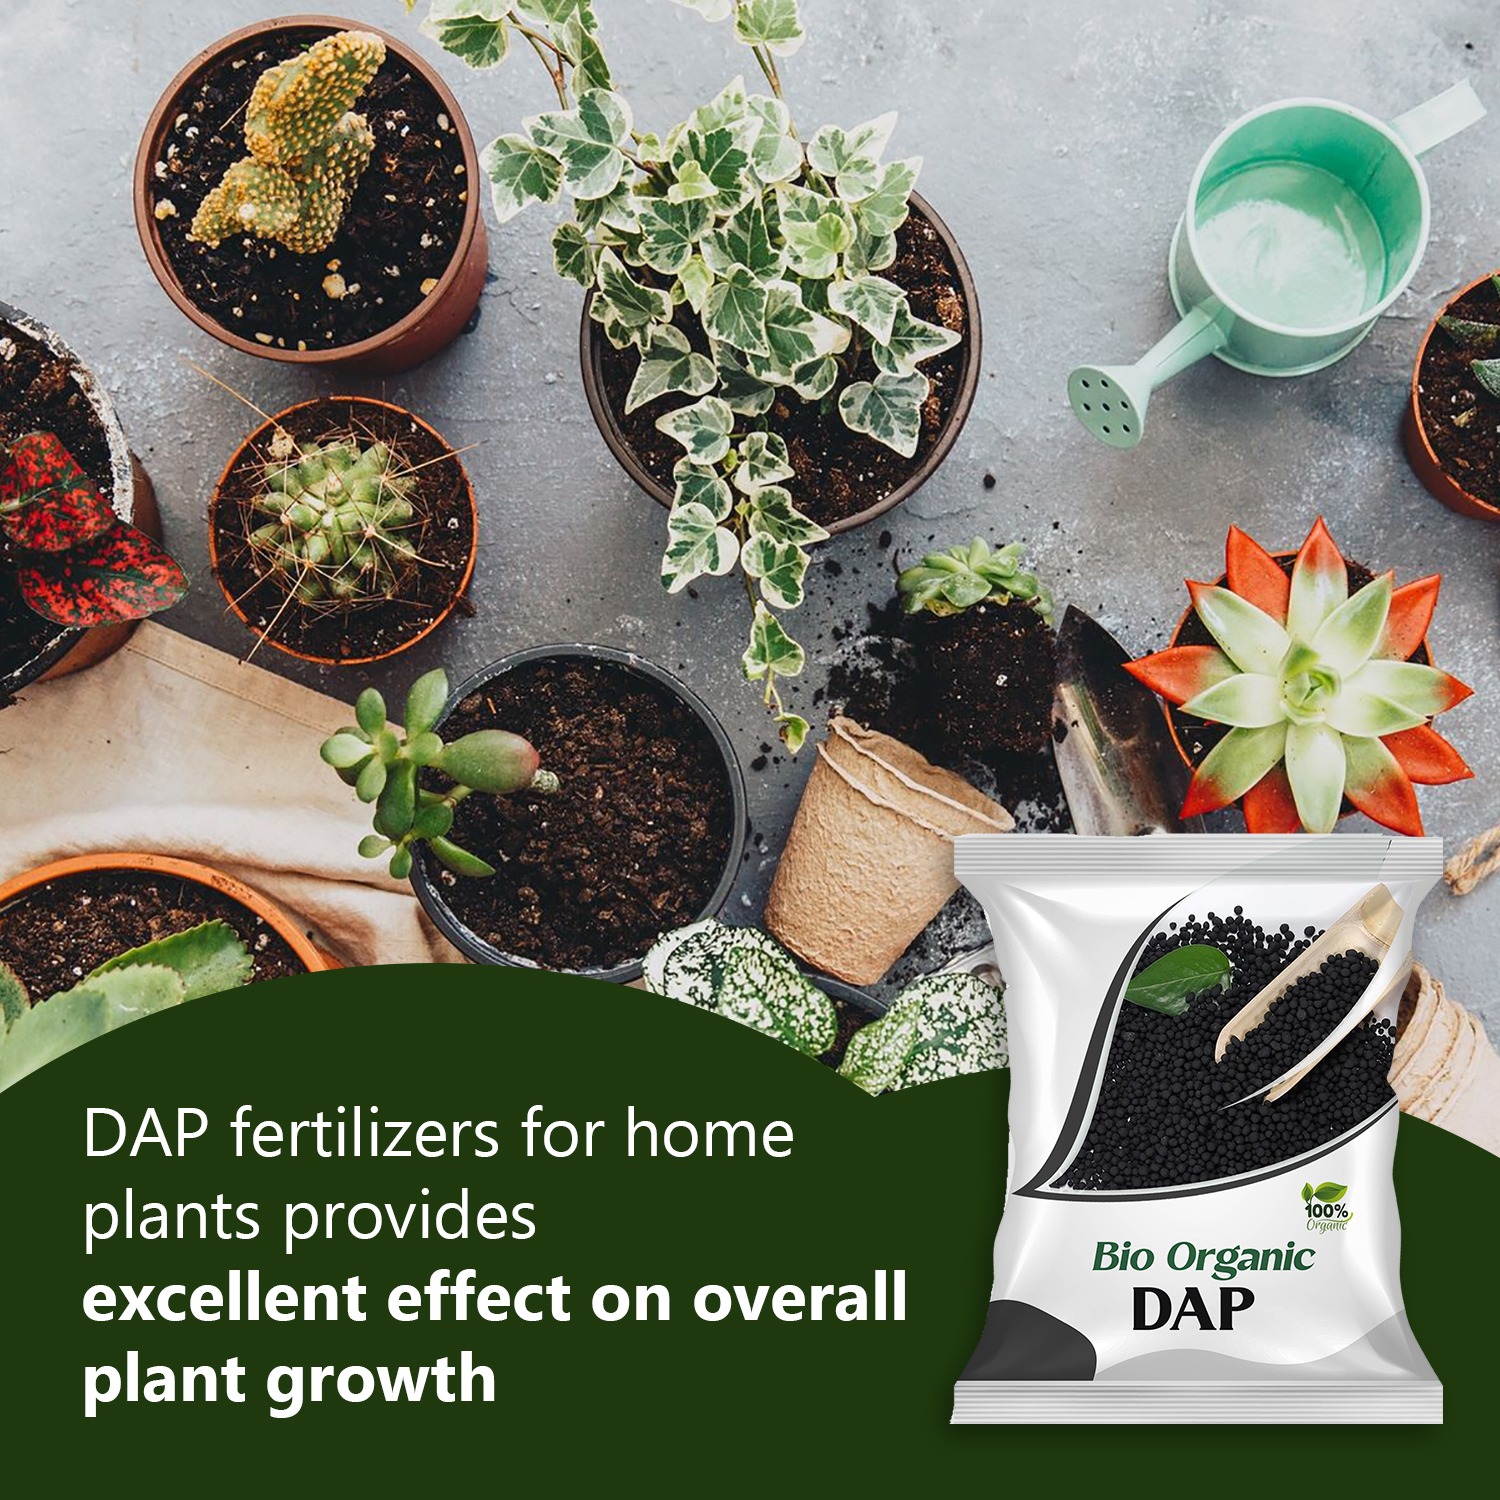 6009 SDF INDIA Bio Organic DAP Fertilizer for Crops ( 40 KG )(SDF40BOD)(6008_DAP_40KG)